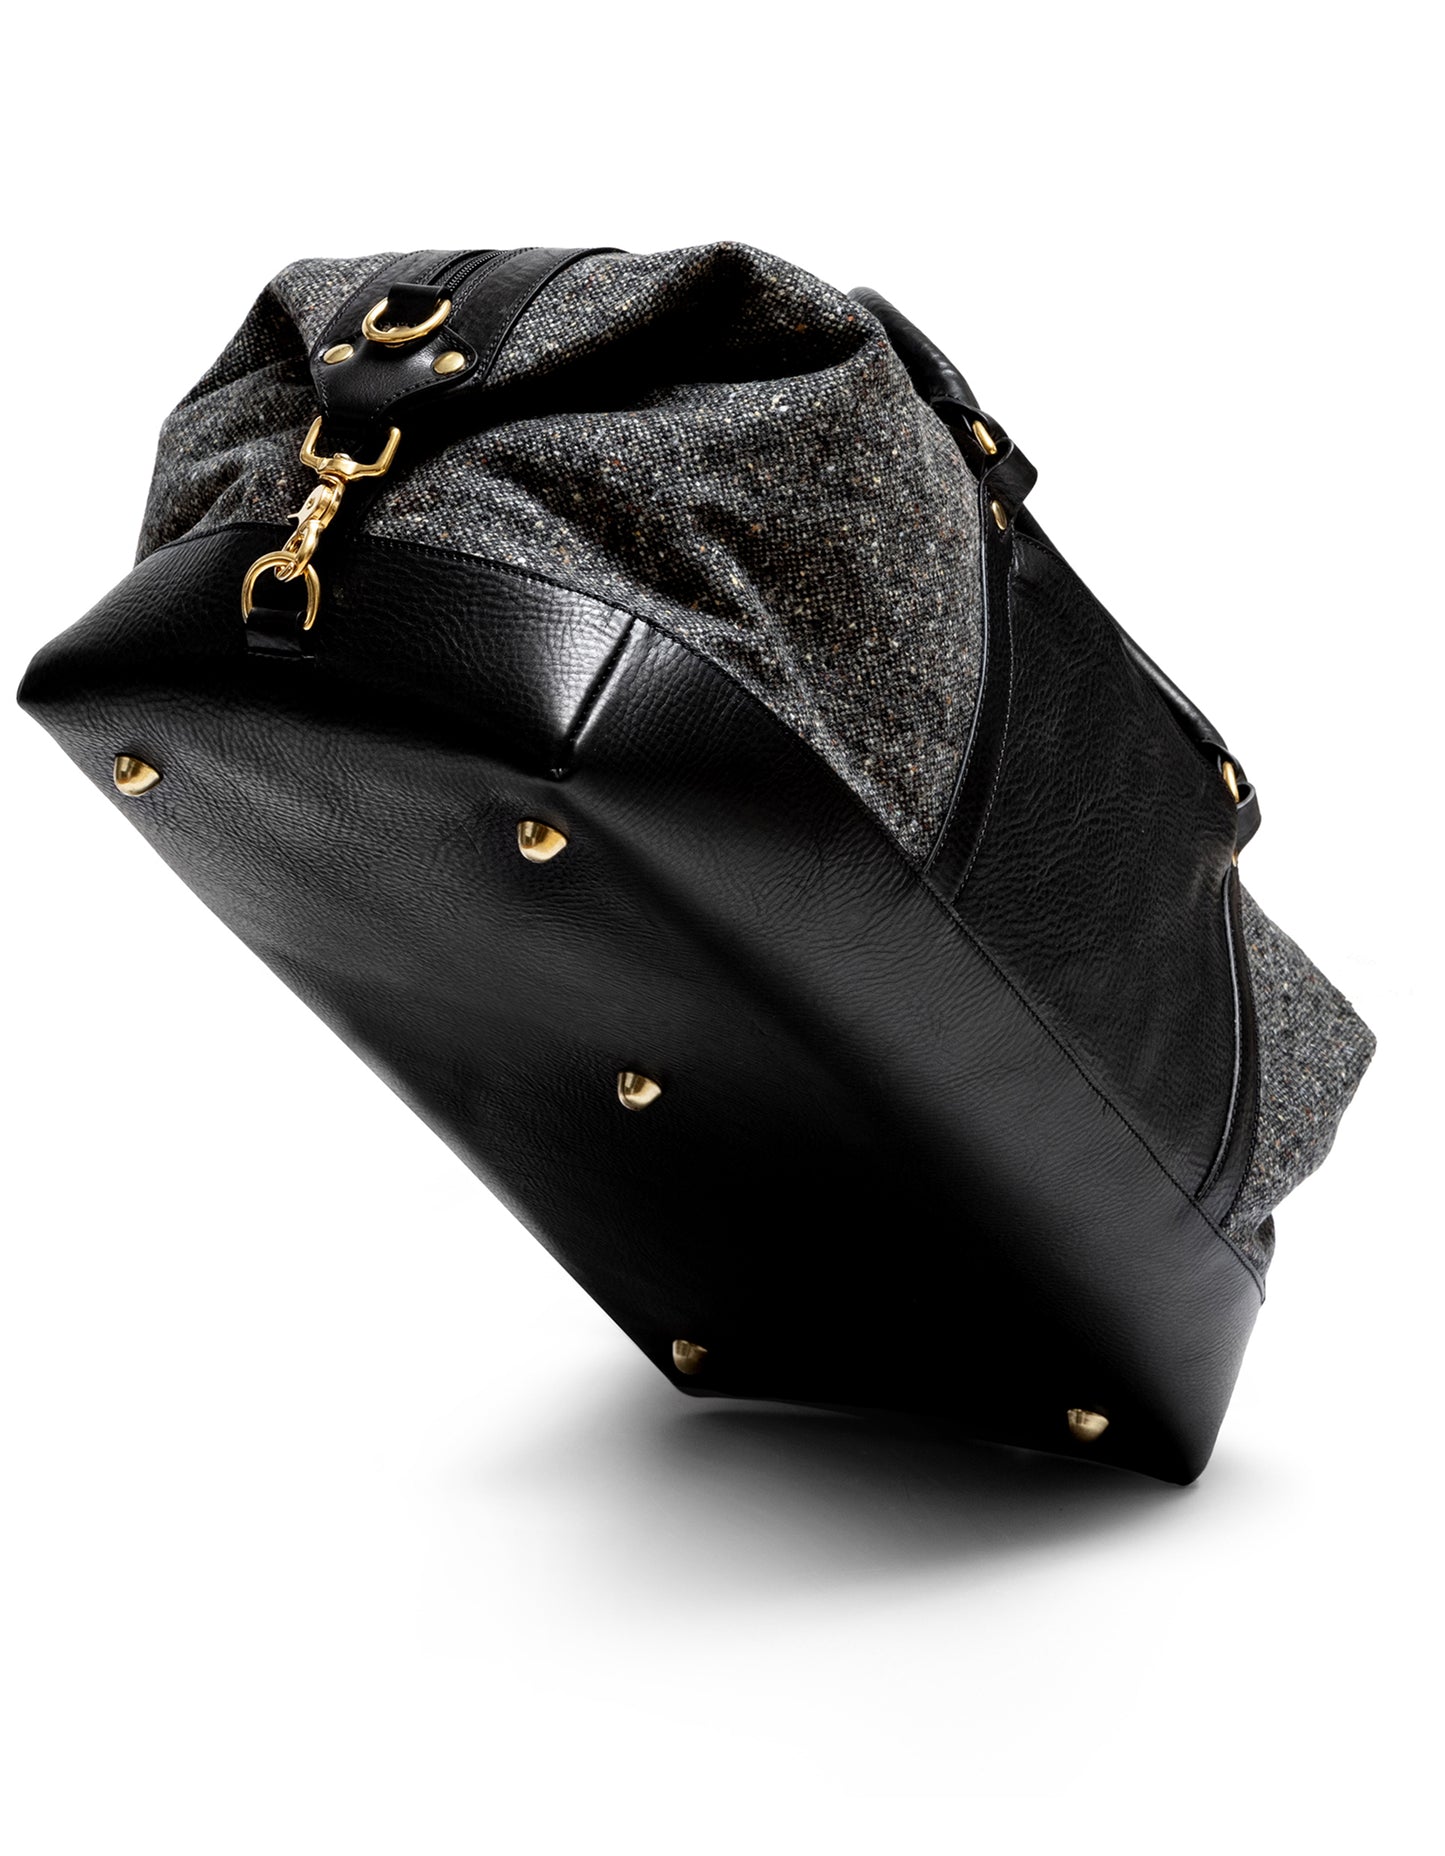 grey leather duffle bag